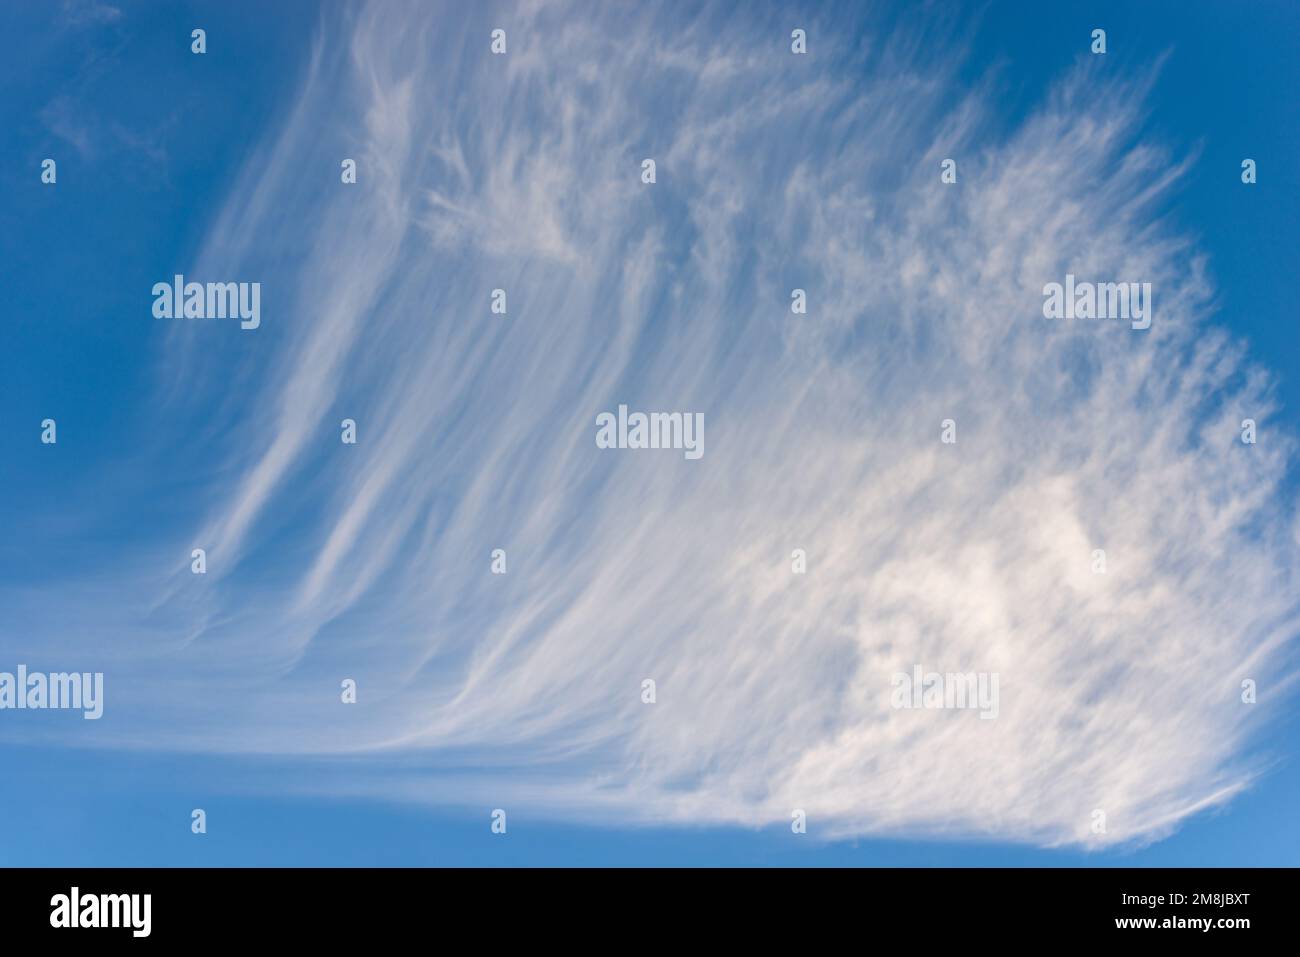 Fotografia di belle nuvole di cumulo o di cumulonimbus e cirrocumulus nuvole bianche, contro un cielo blu chiaro. Full frame, solo cielo. Foto Stock